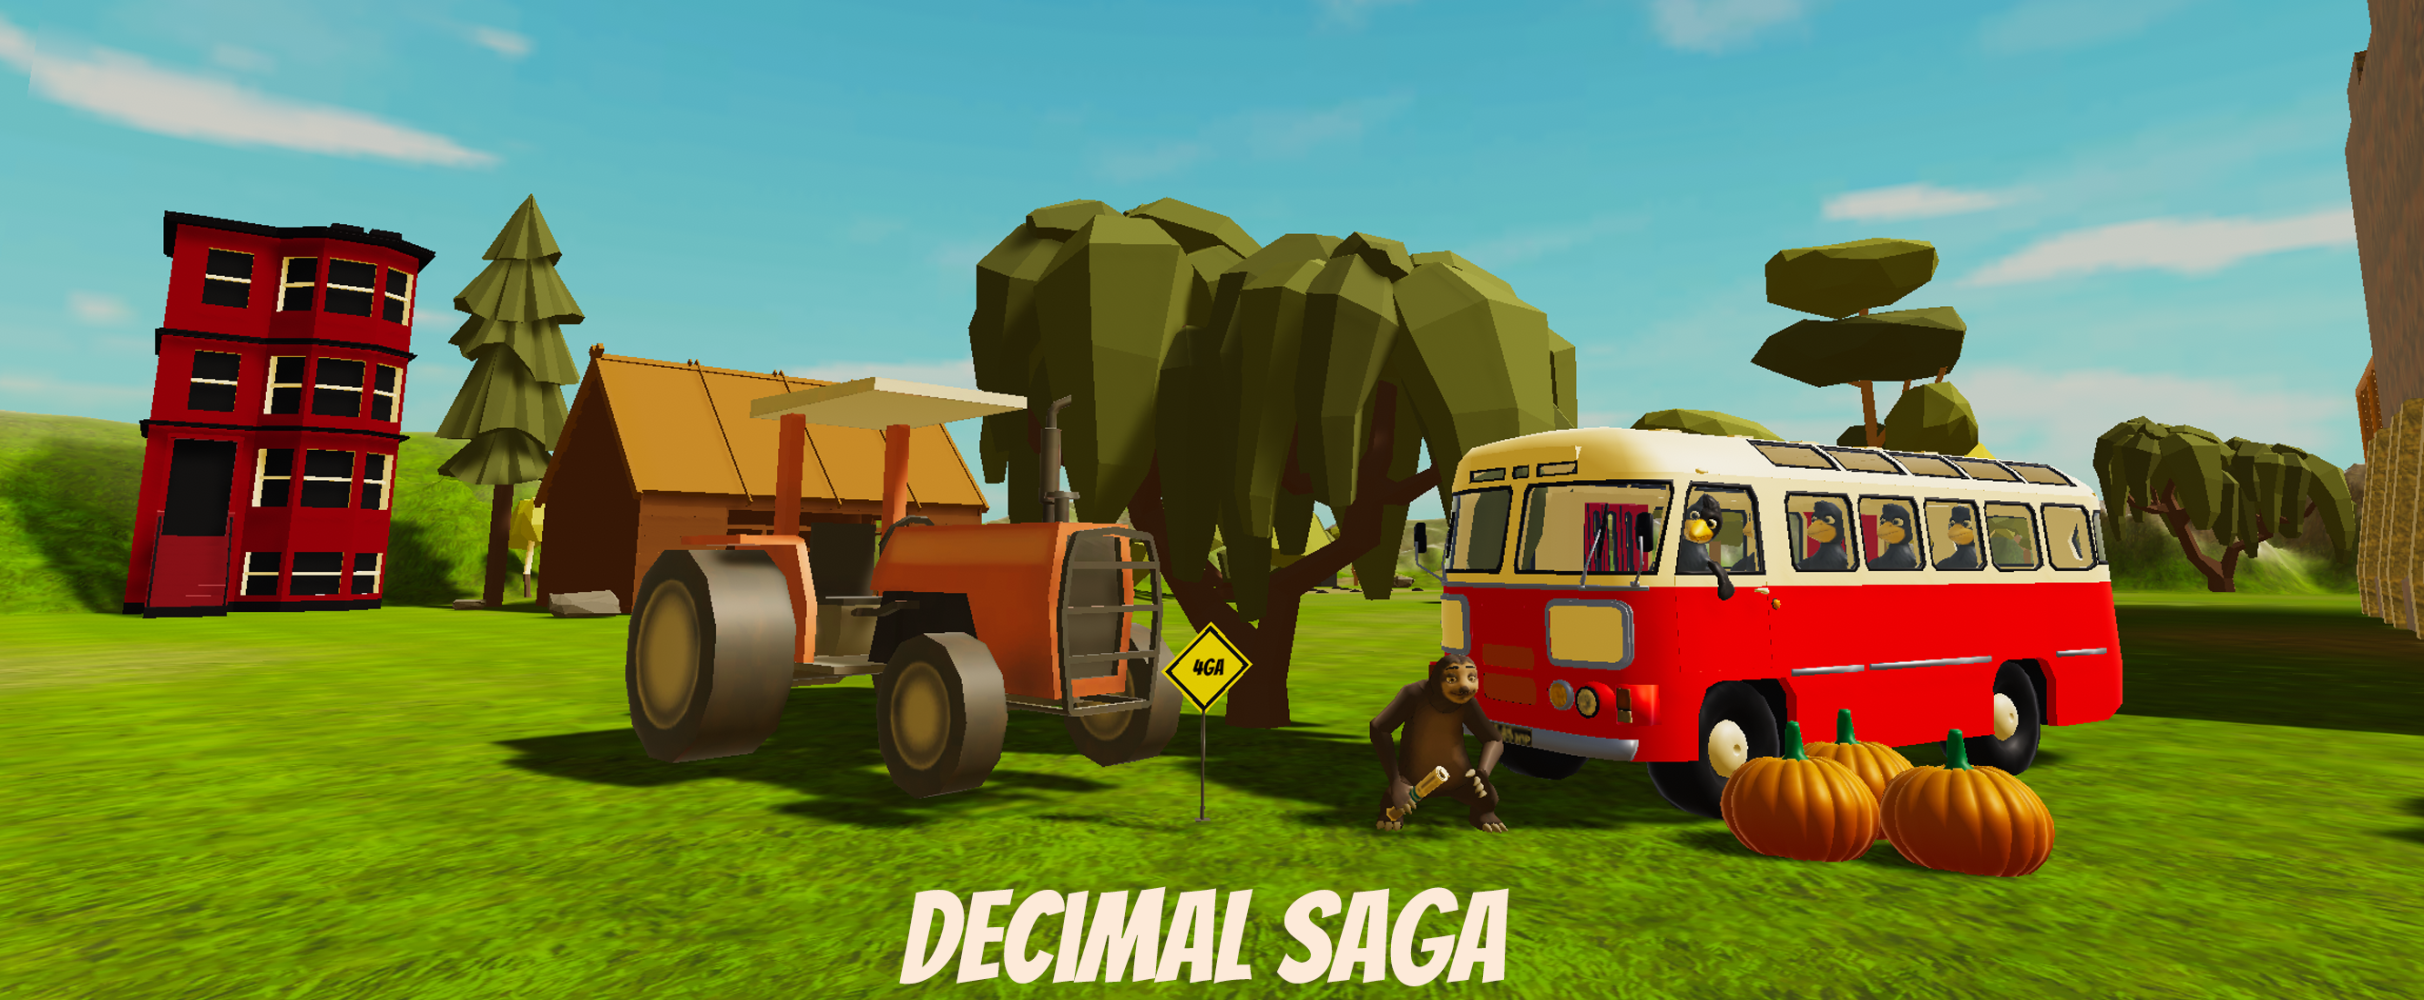 Decimal Saga ART